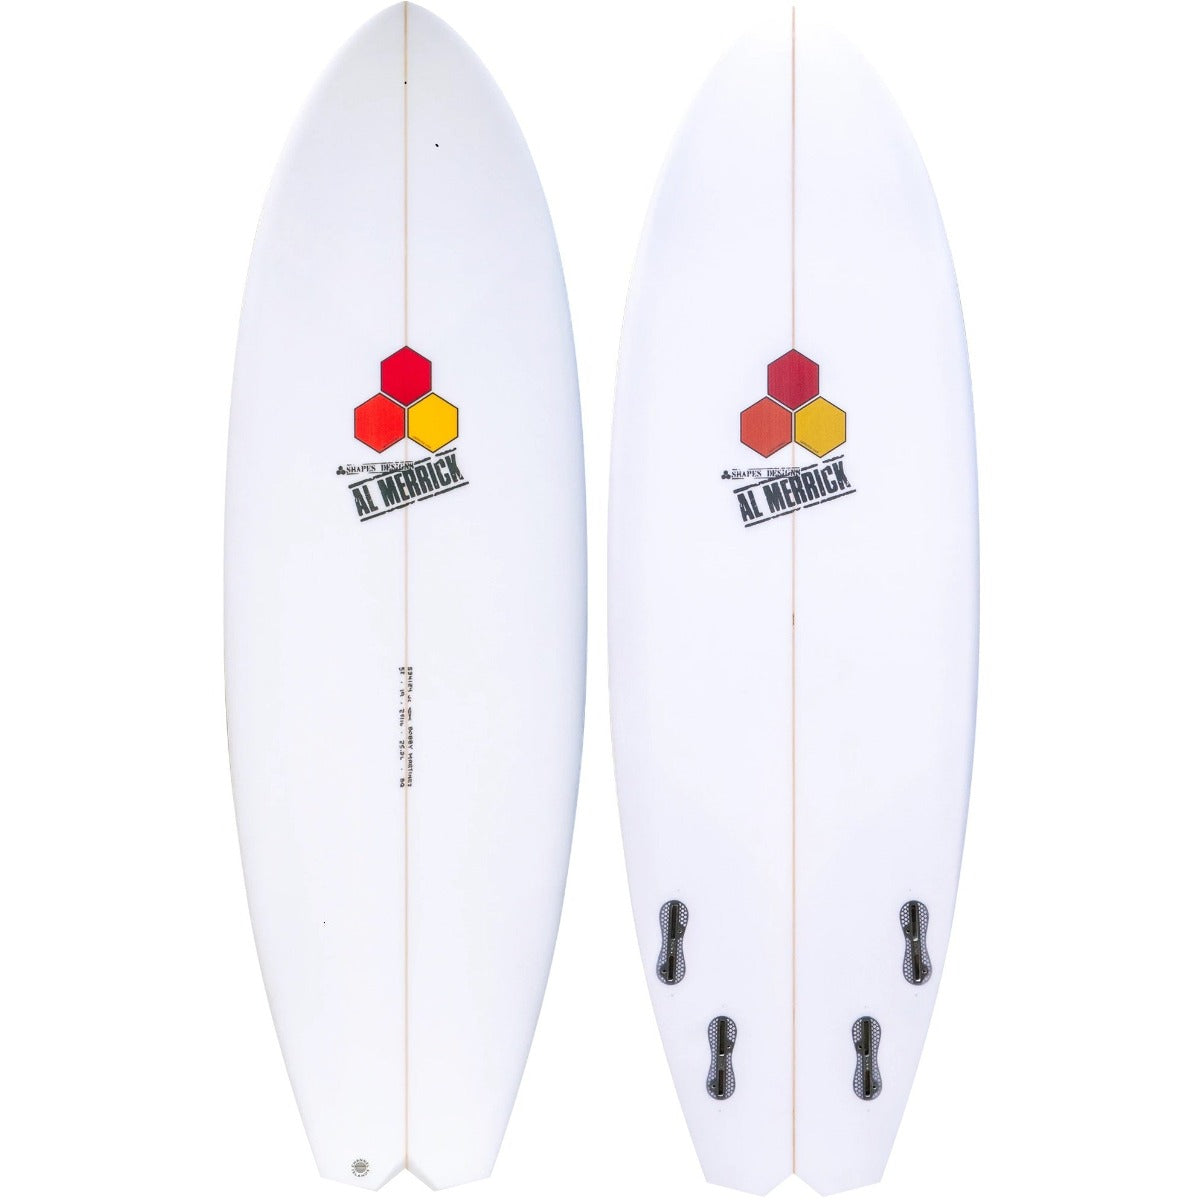 Channel Islands Surfboards Bobby Quad Hybrid Shortboard Preorder